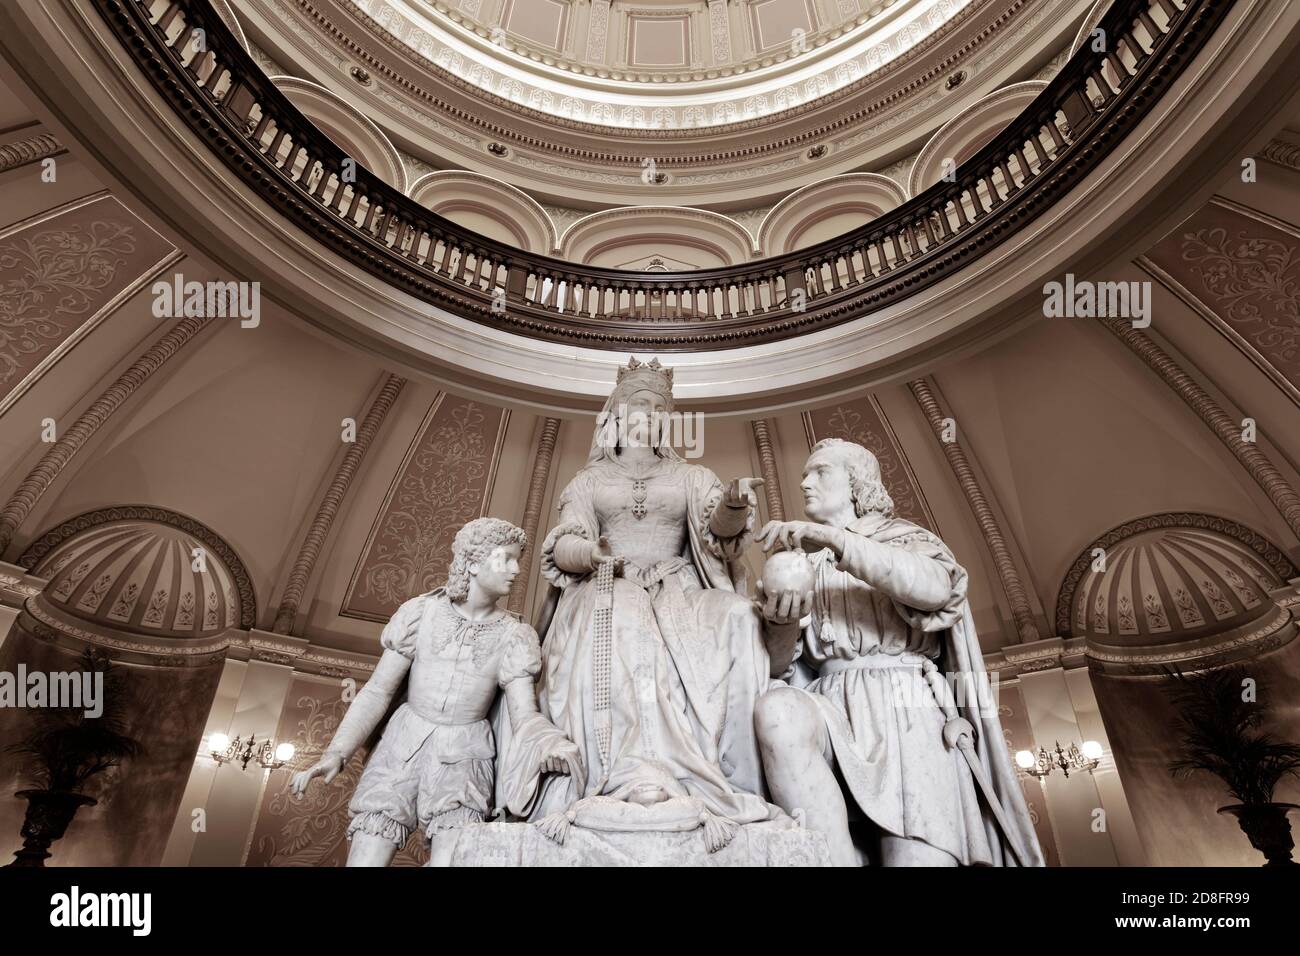 Statue of Queen Isabella & Columbus in the Rotunda of the State Capitol, Sacramento, California, USA Stock Photo